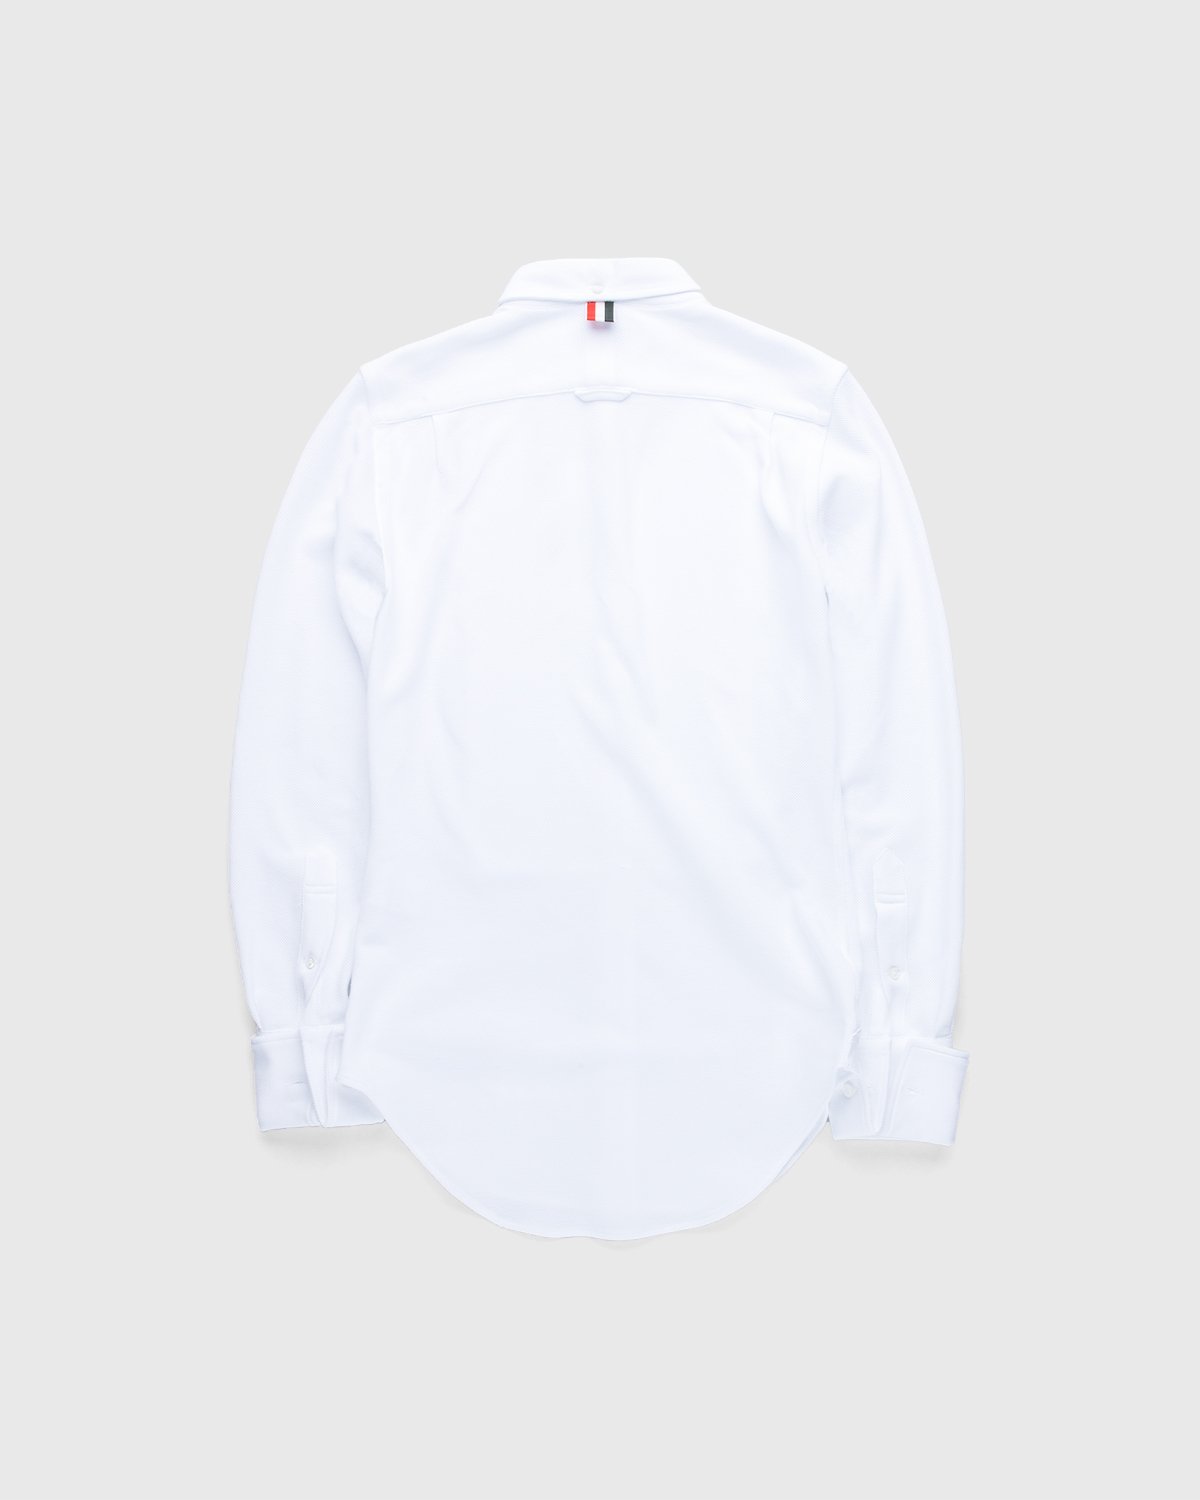 Thom Browne x Highsnobiety - Women’s Button-Down Shirt White - Clothing - White - Image 2